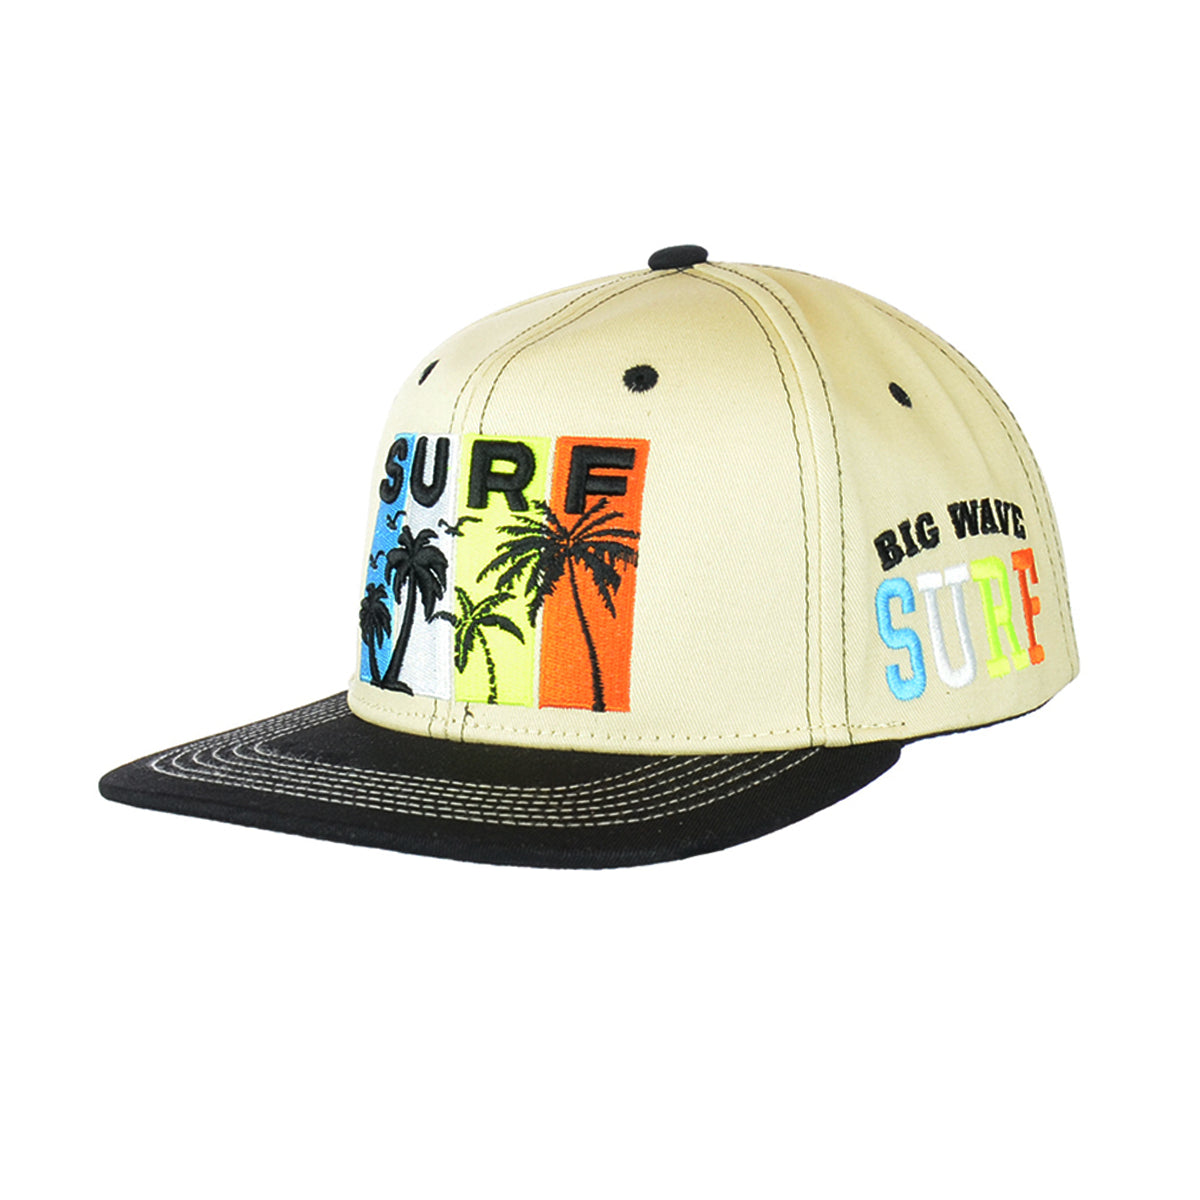 Snapback "SURF" Hat Embroidered